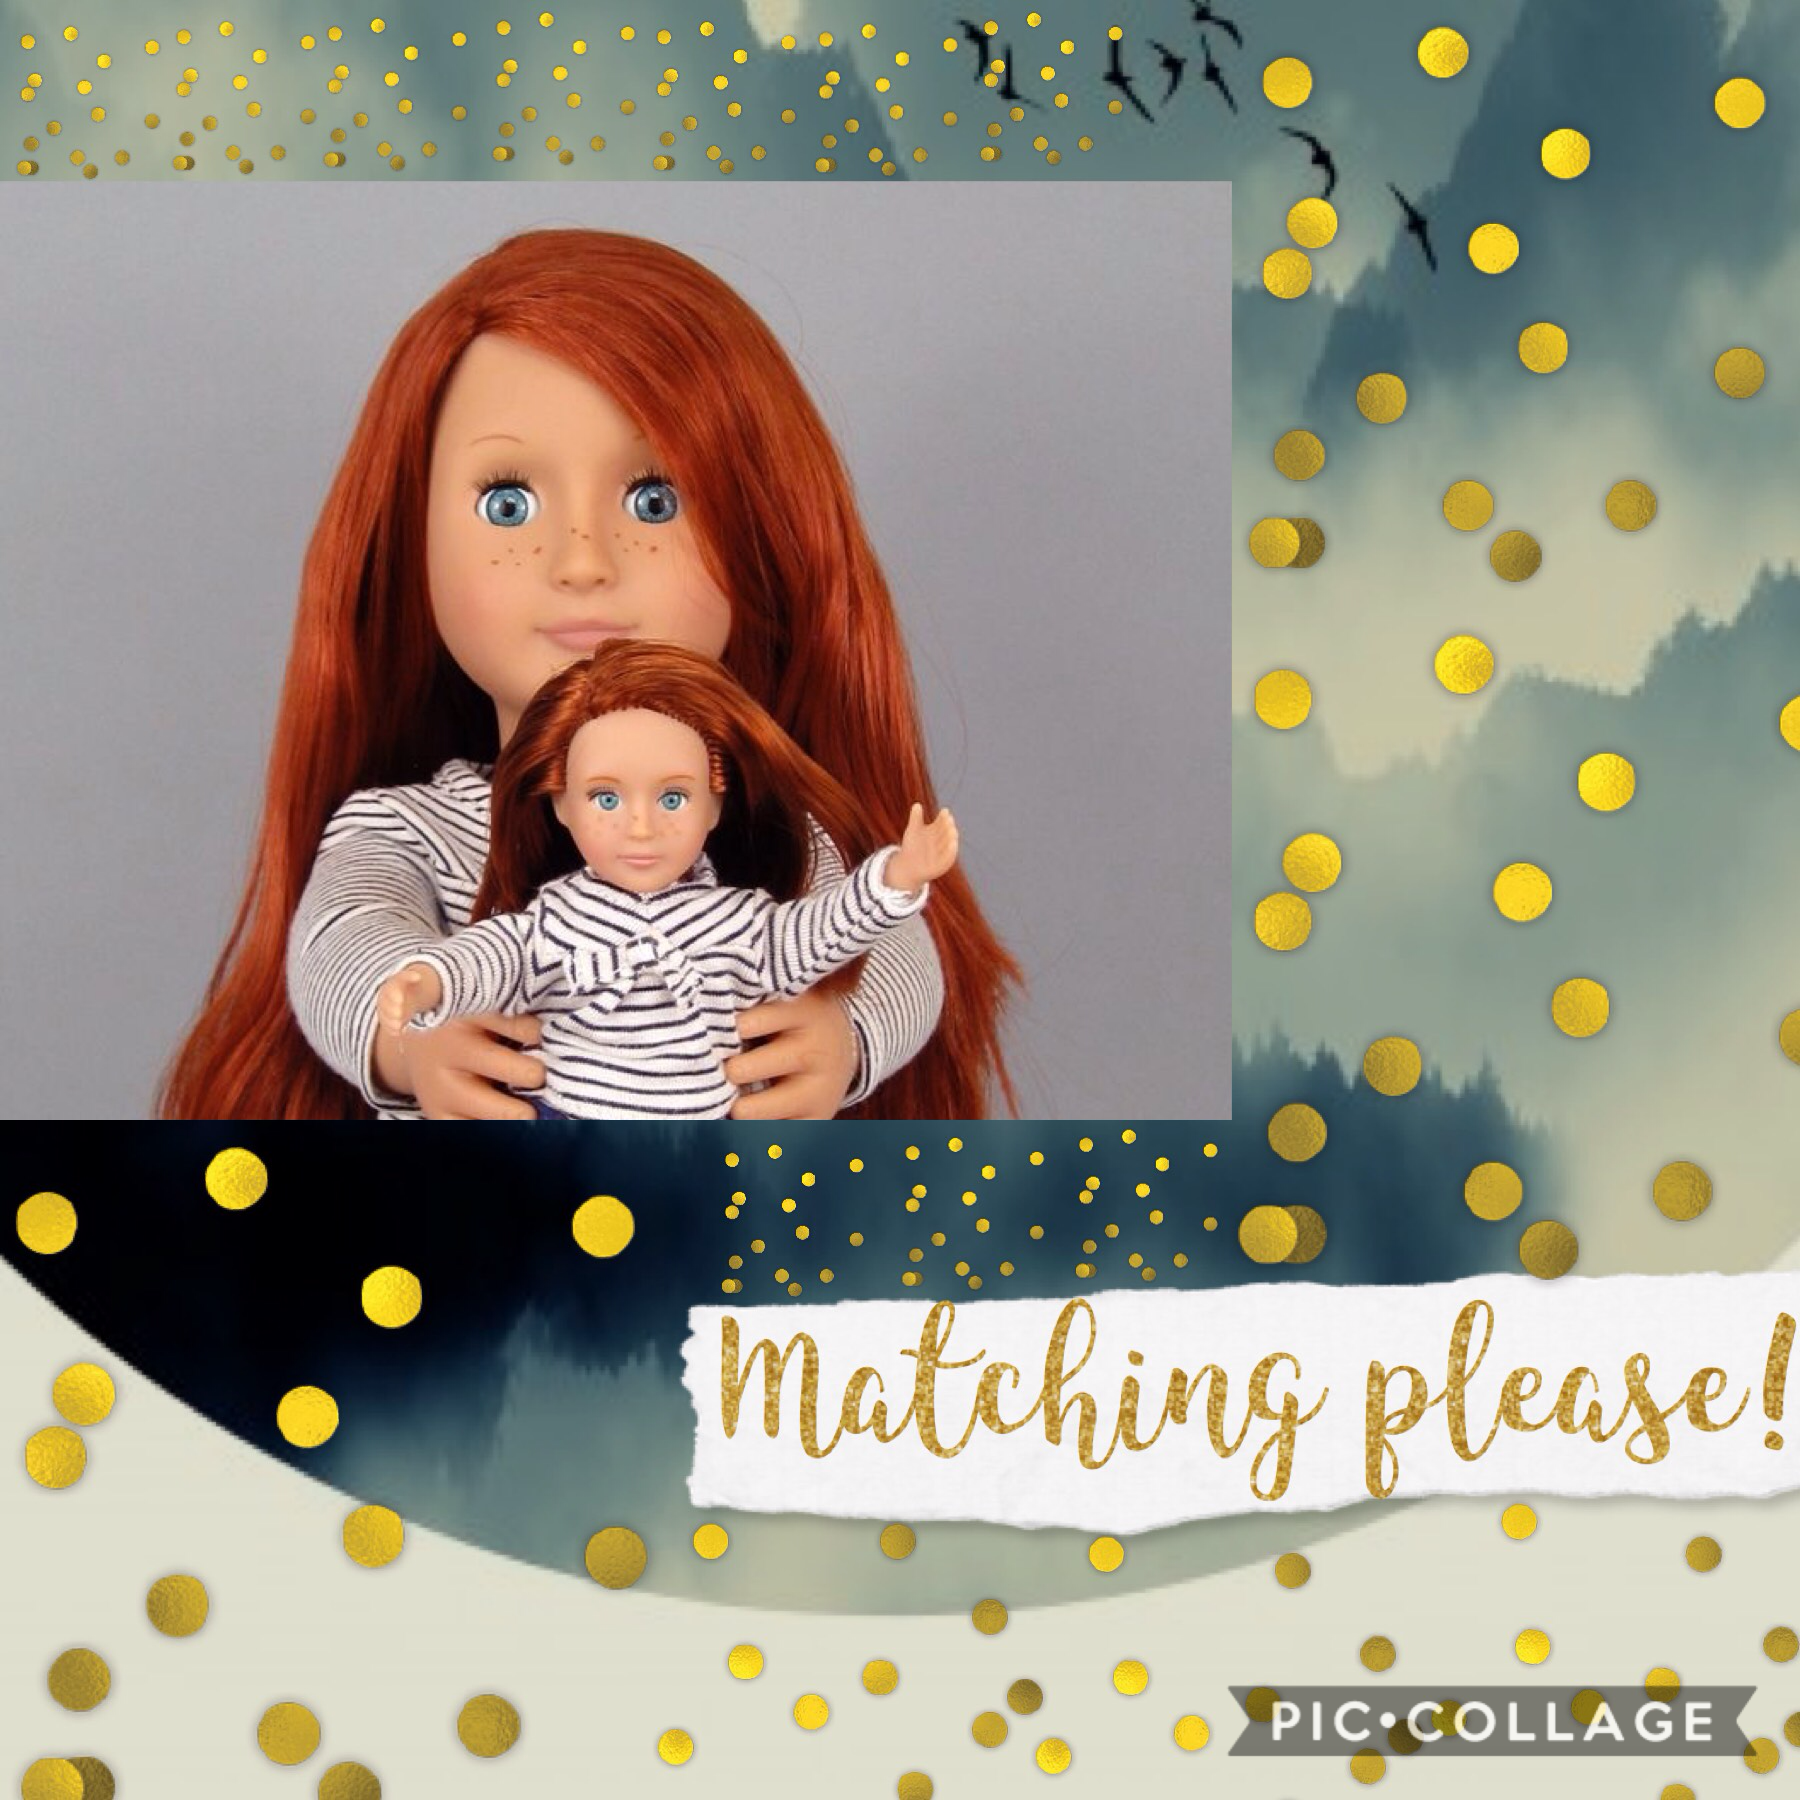 Loving matching my doll!